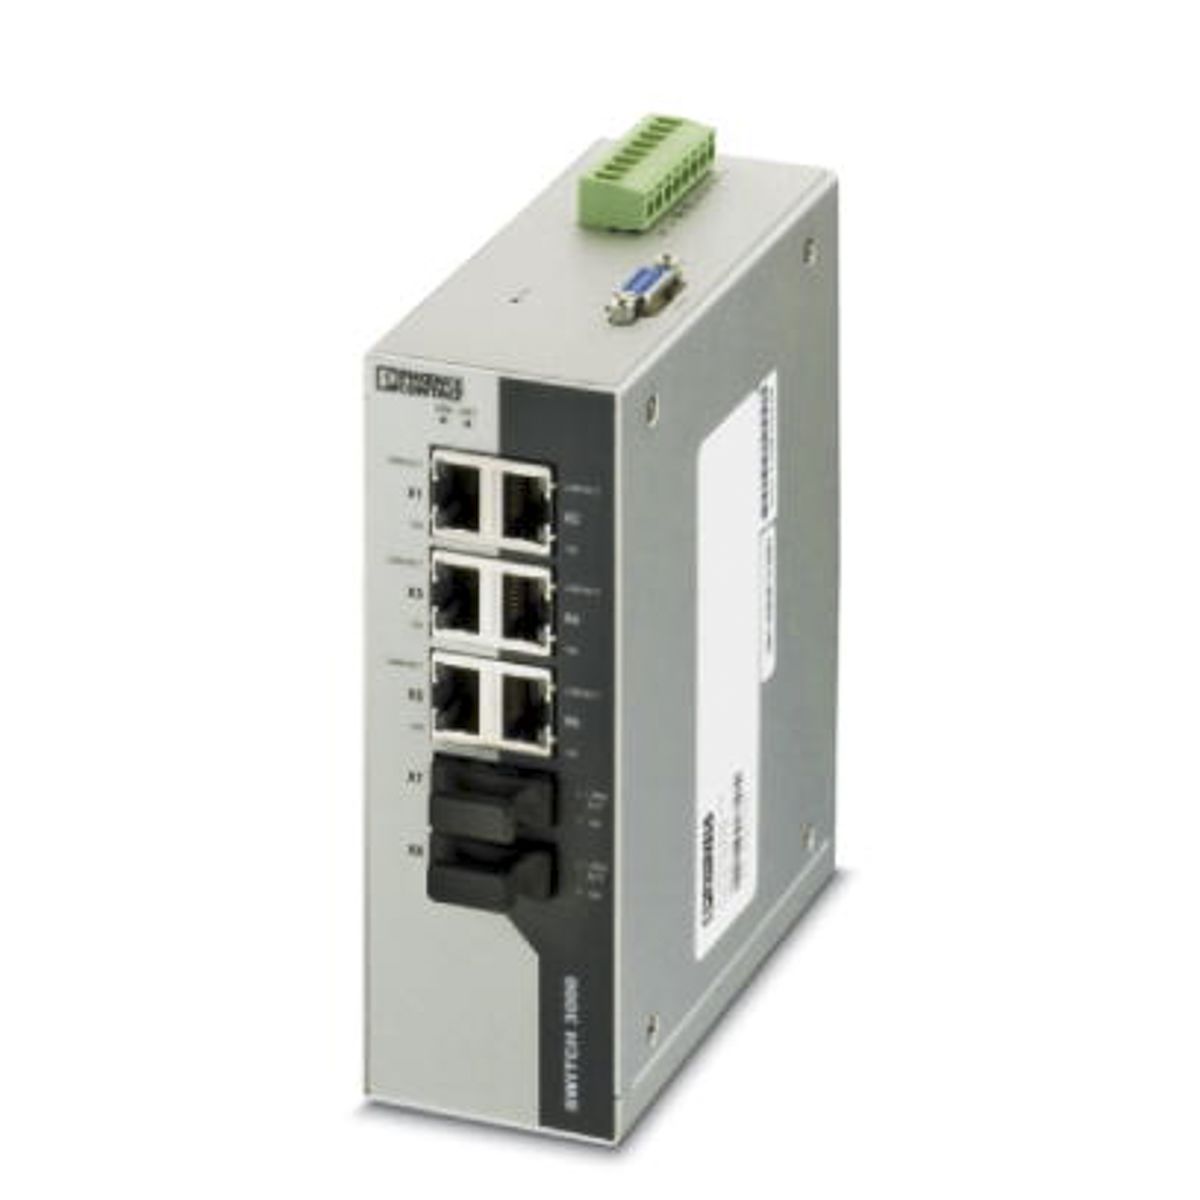 Phoenix ContactFL SWITCH 3006T-2FX Series DIN Rail Mount Ethernet Switch, 6 RJ45 Ports, 100Mbit/s Transmission, 24V dc